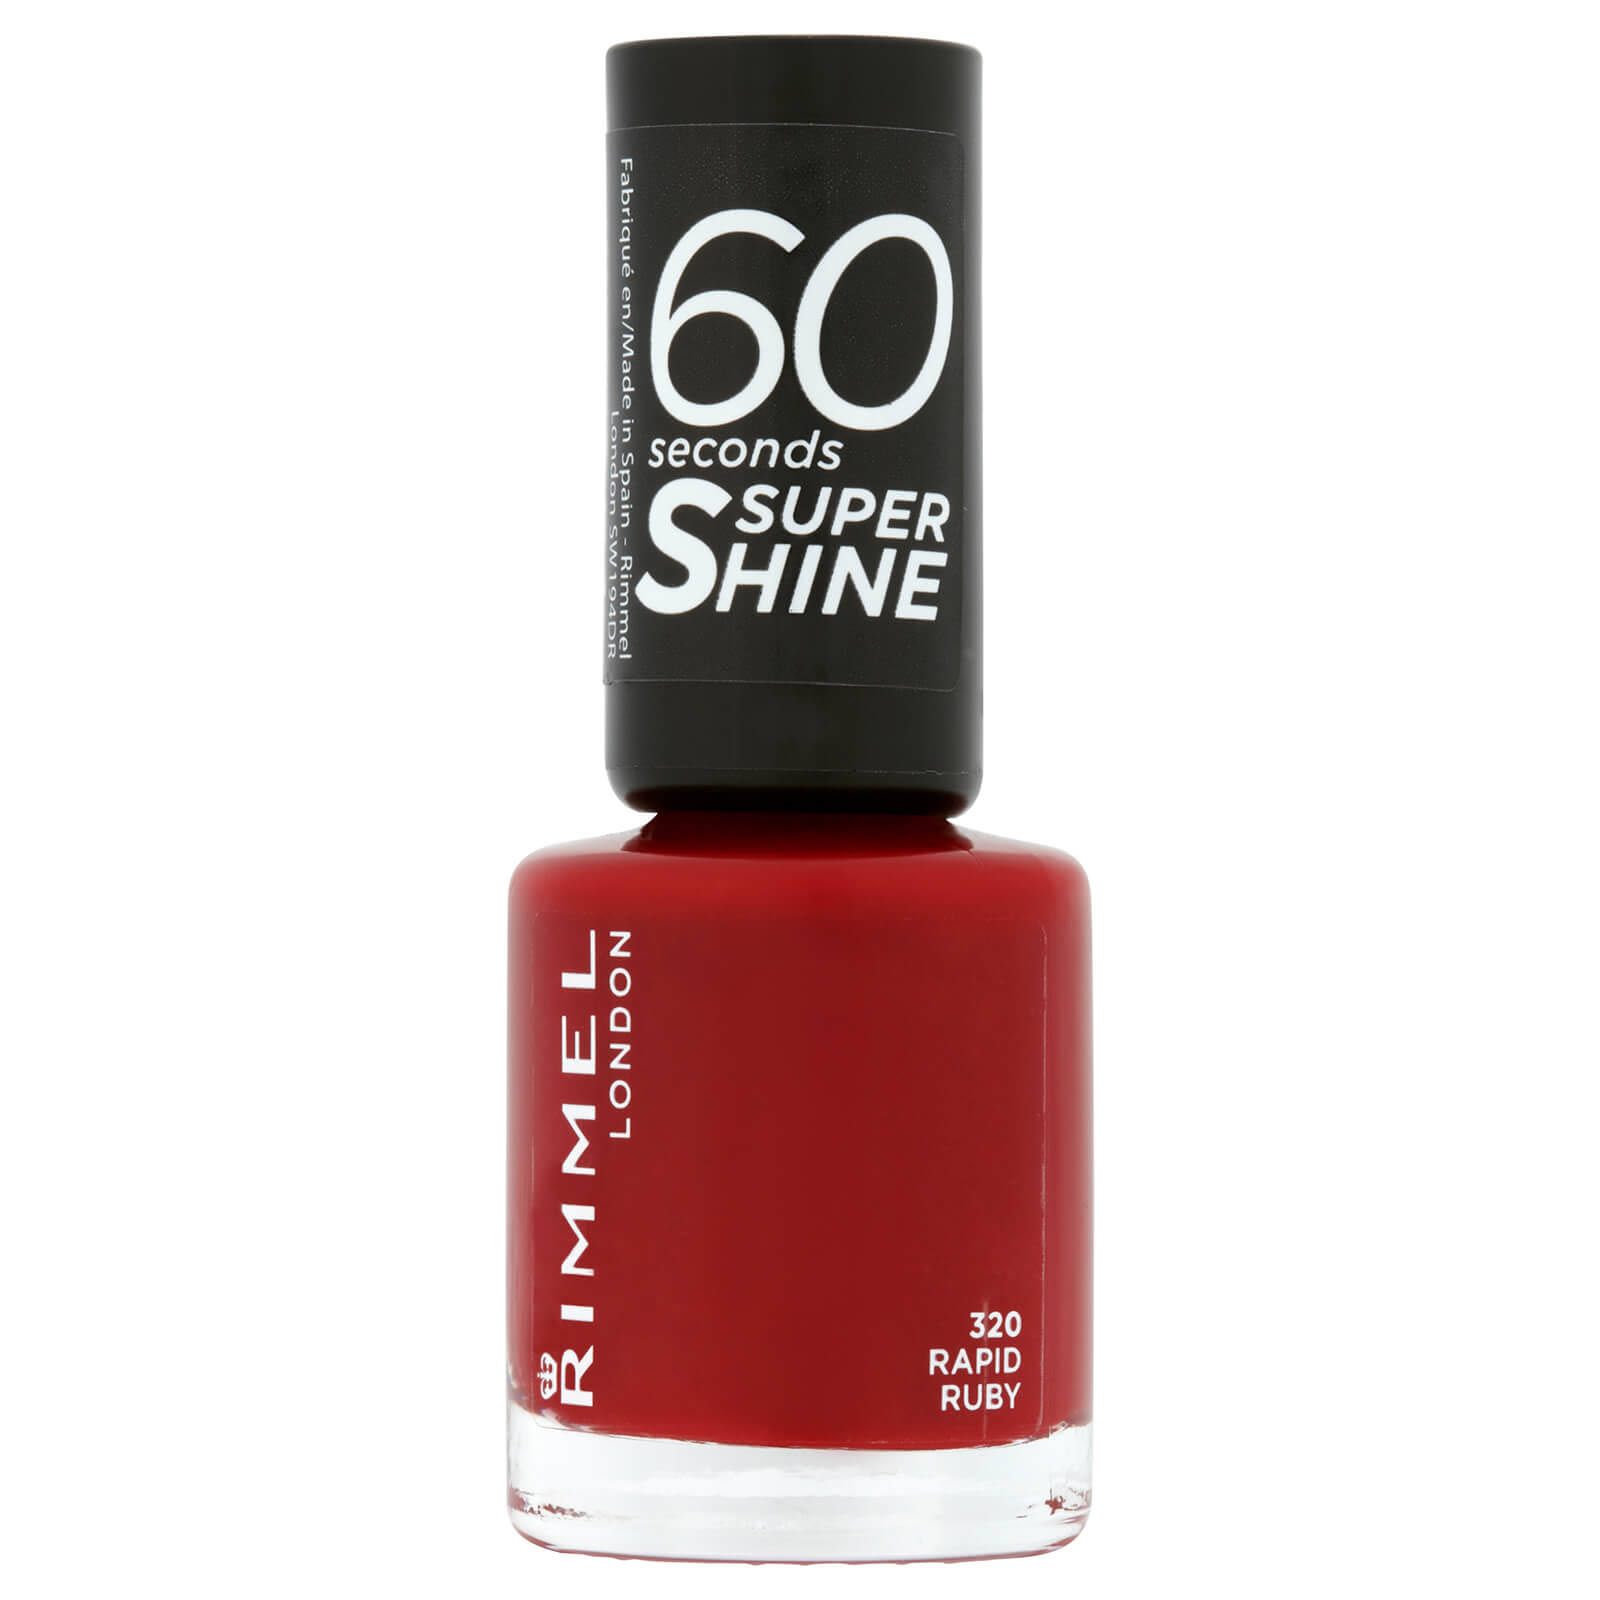 Rimmel London 60 Seconds Super Shine Nail Polish - 320 Rapid Ruby, 8ml